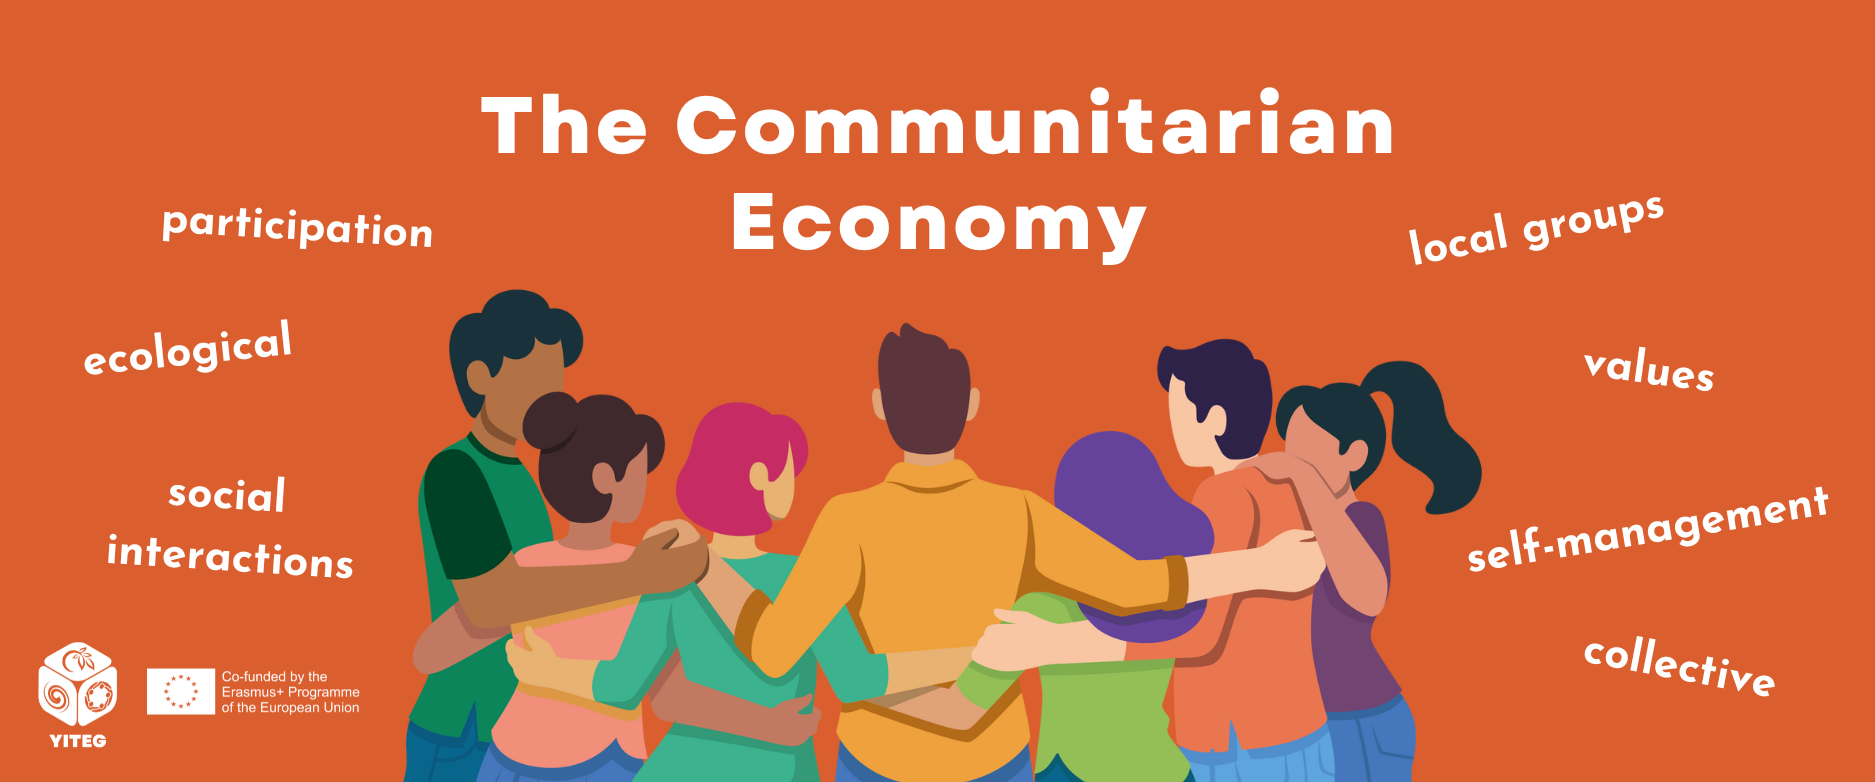 The Communitarian Economy